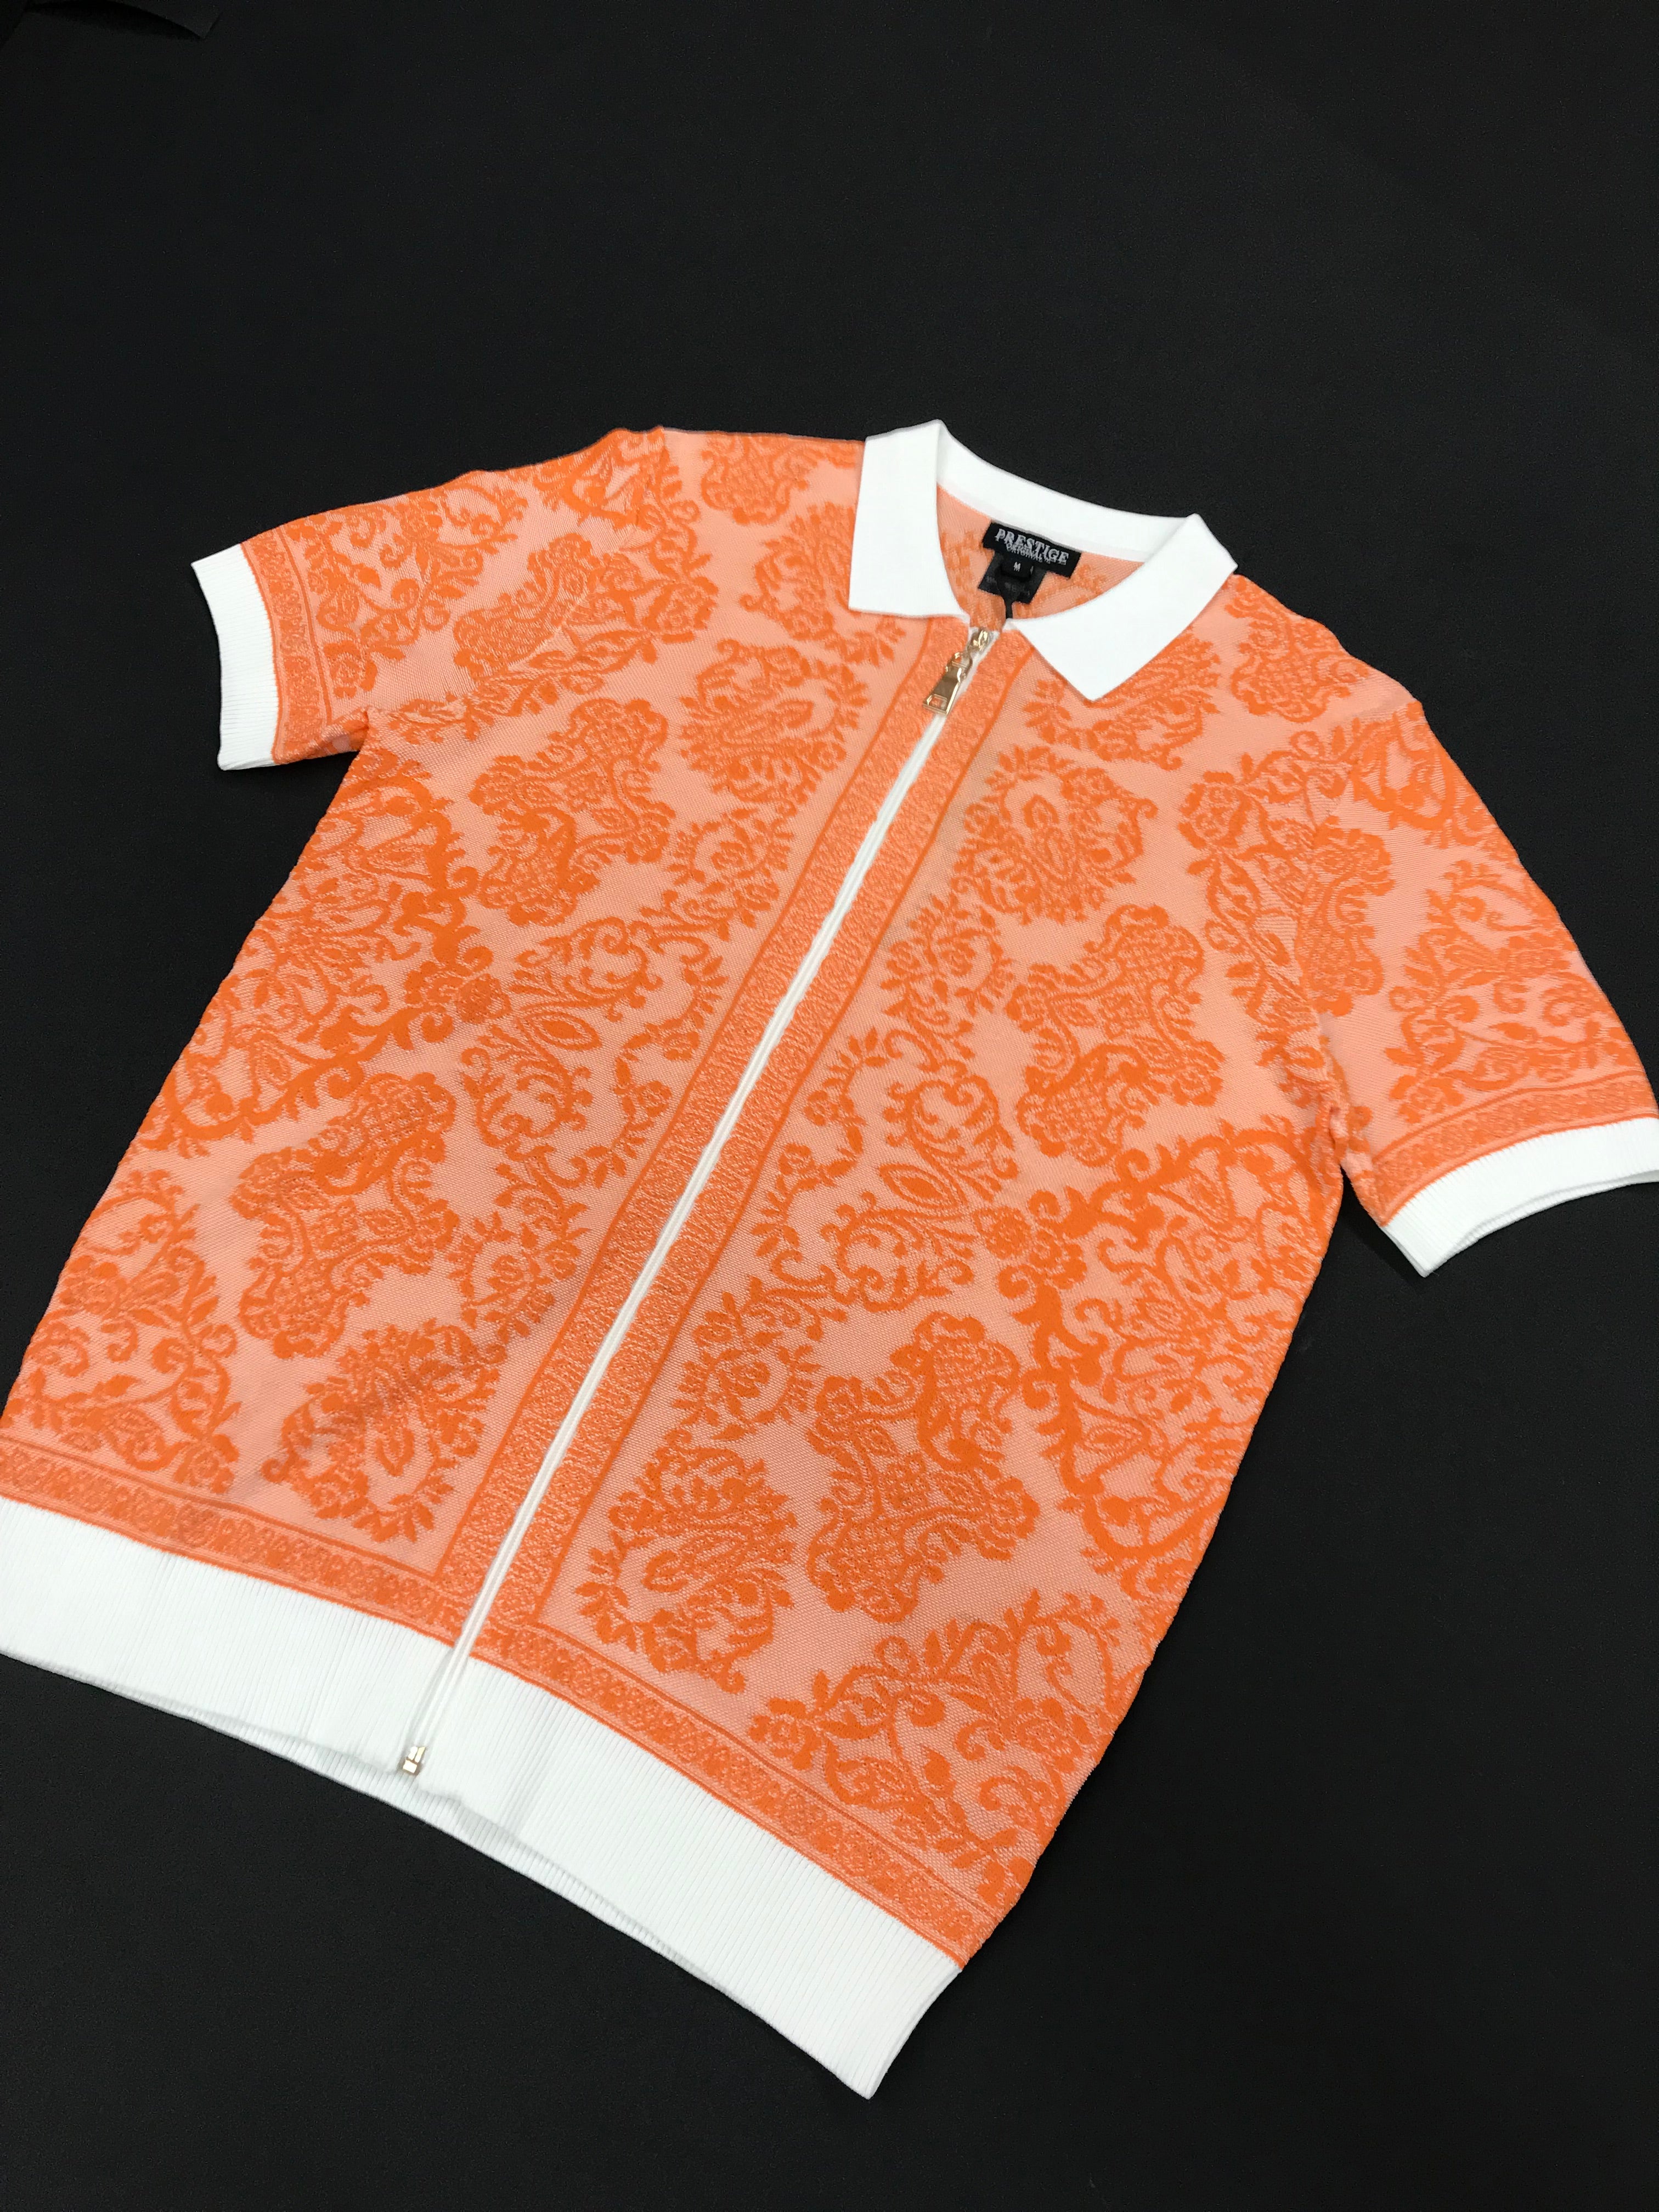 Prestige Orange/White Short Sleeve Shirt